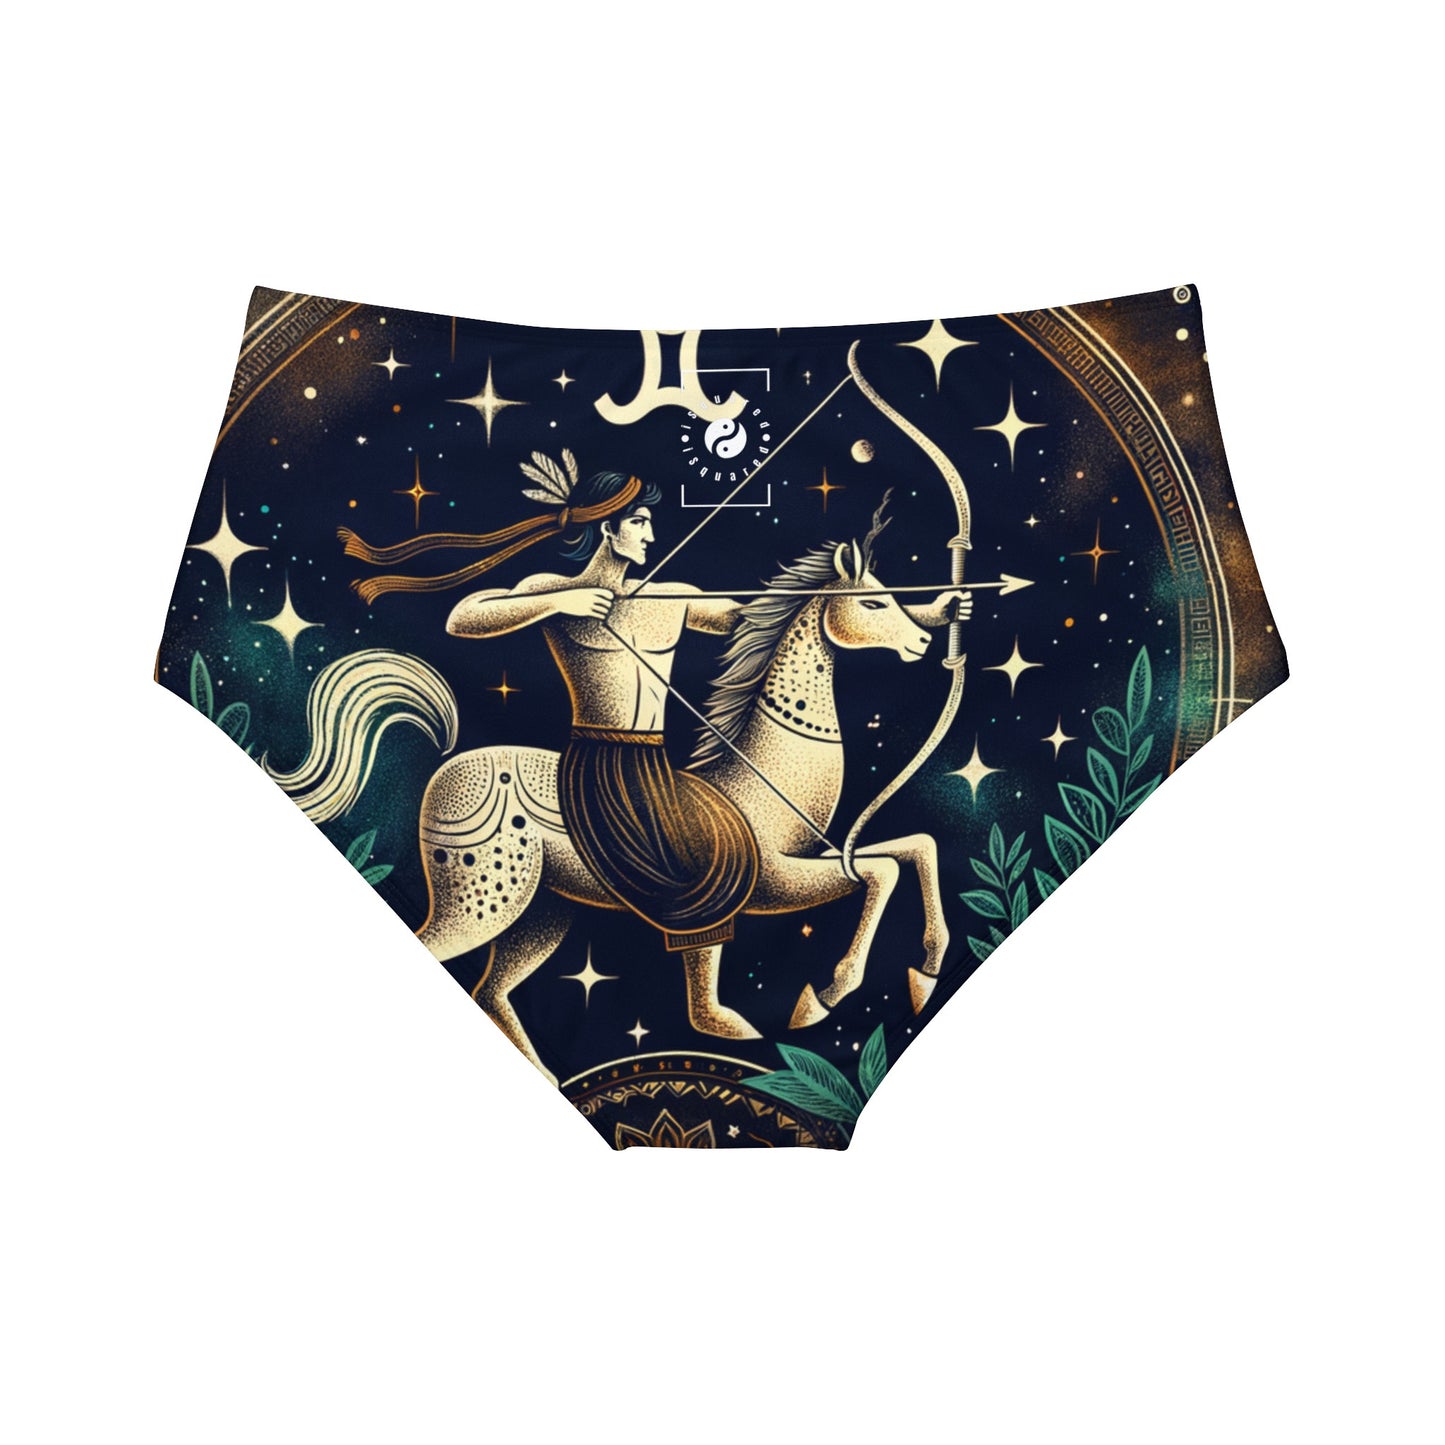 Sagittarius Emblem - High Waisted Bikini Bottom